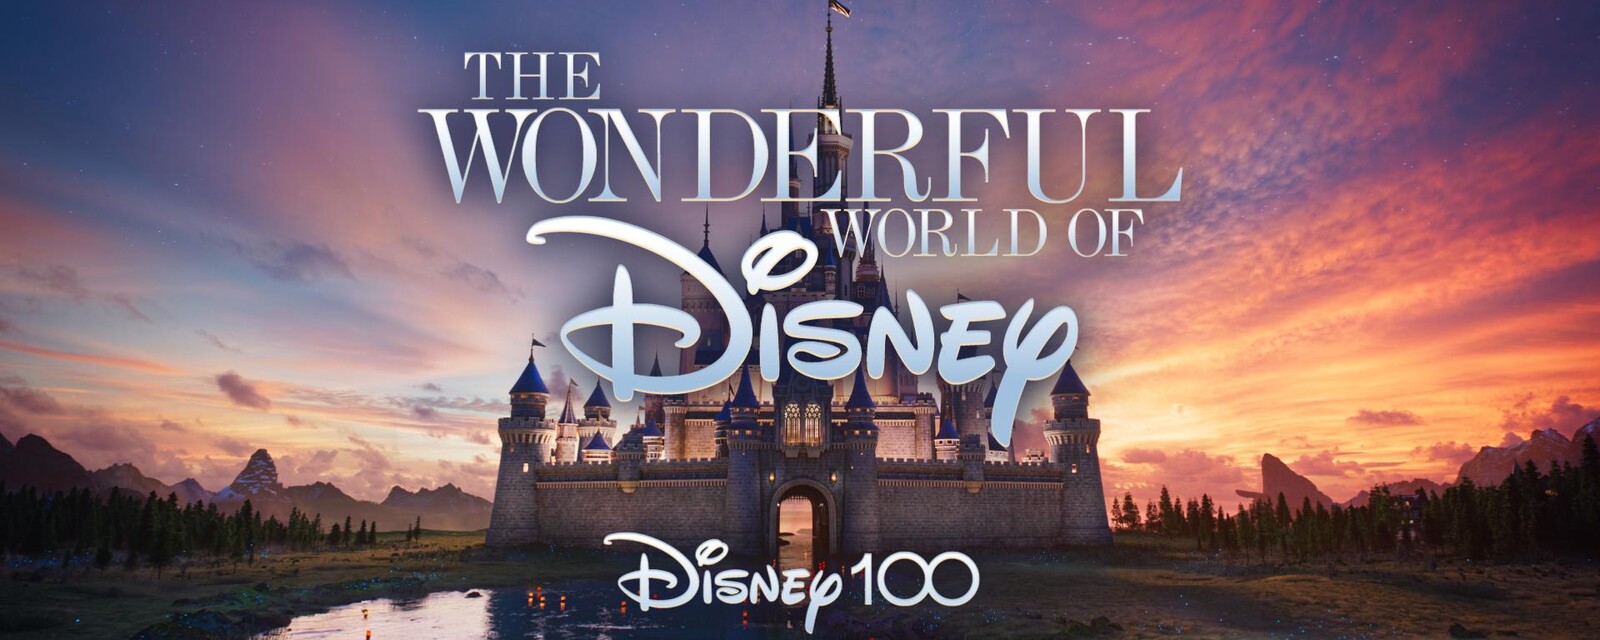 Disney 100 Years of Wonder, Disney Wiki